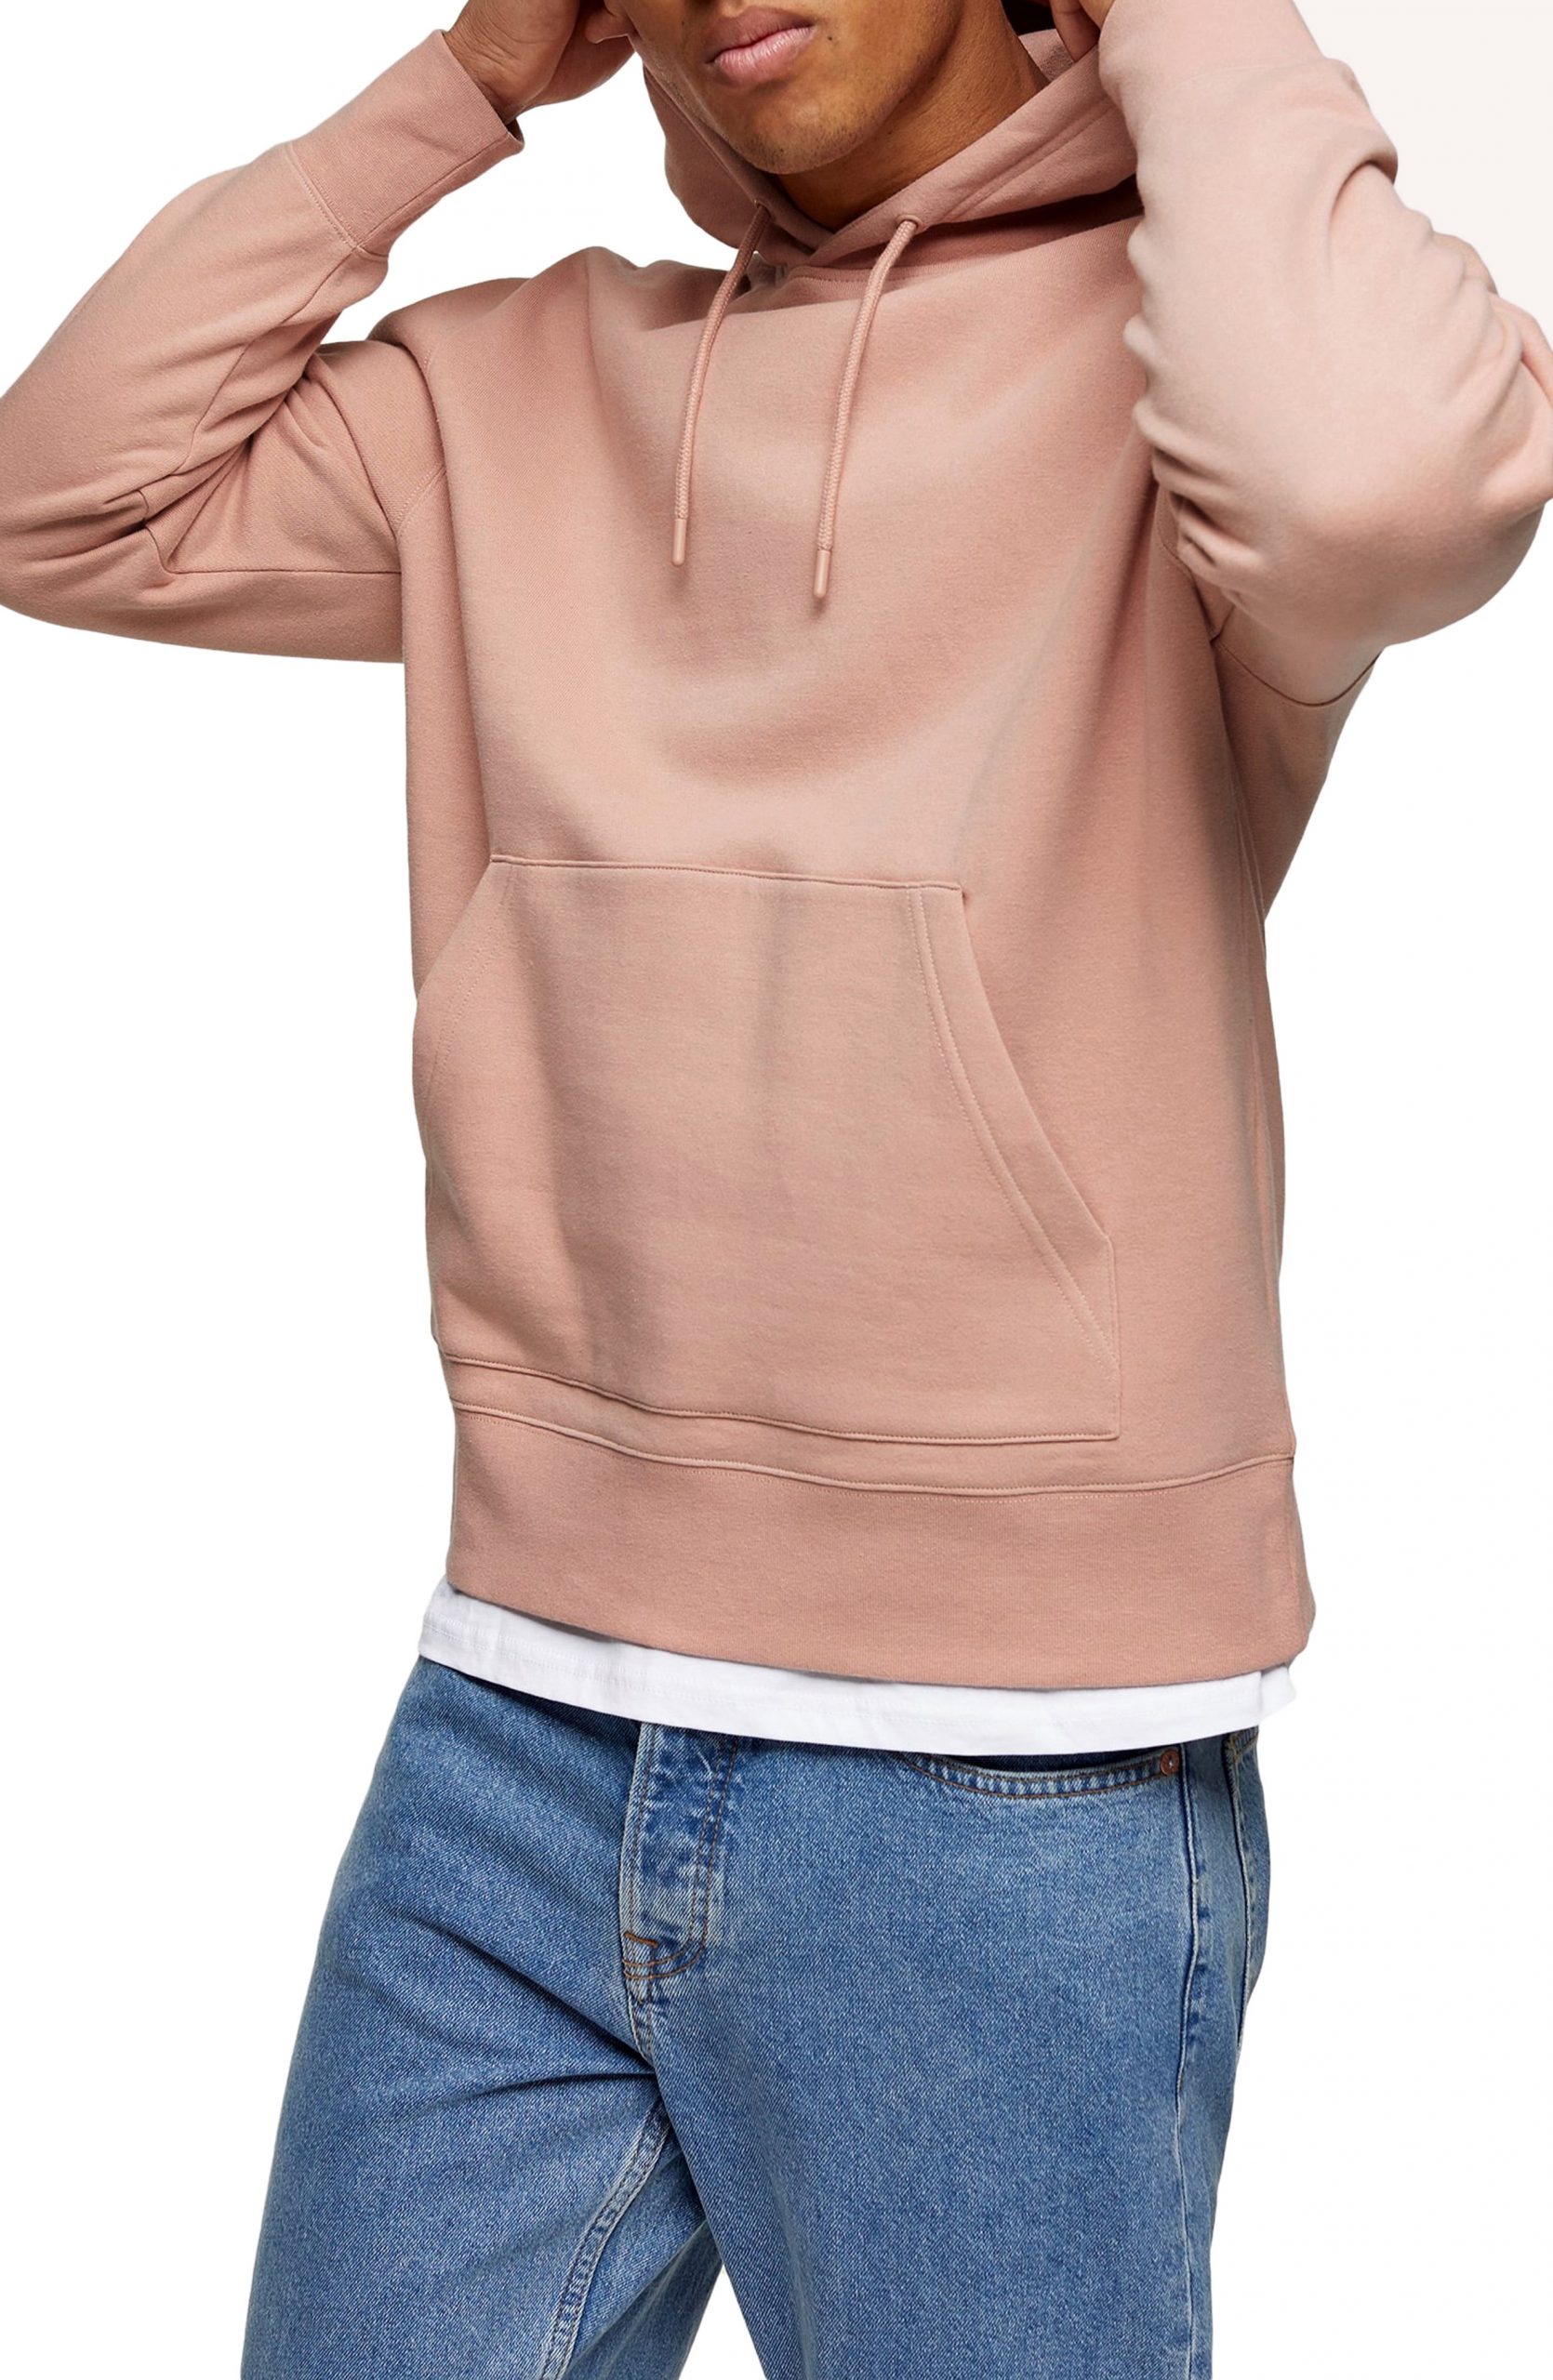 Men’s Topman Dry Hooded Sweatshirt, Size Large - Pink | The Fashionisto